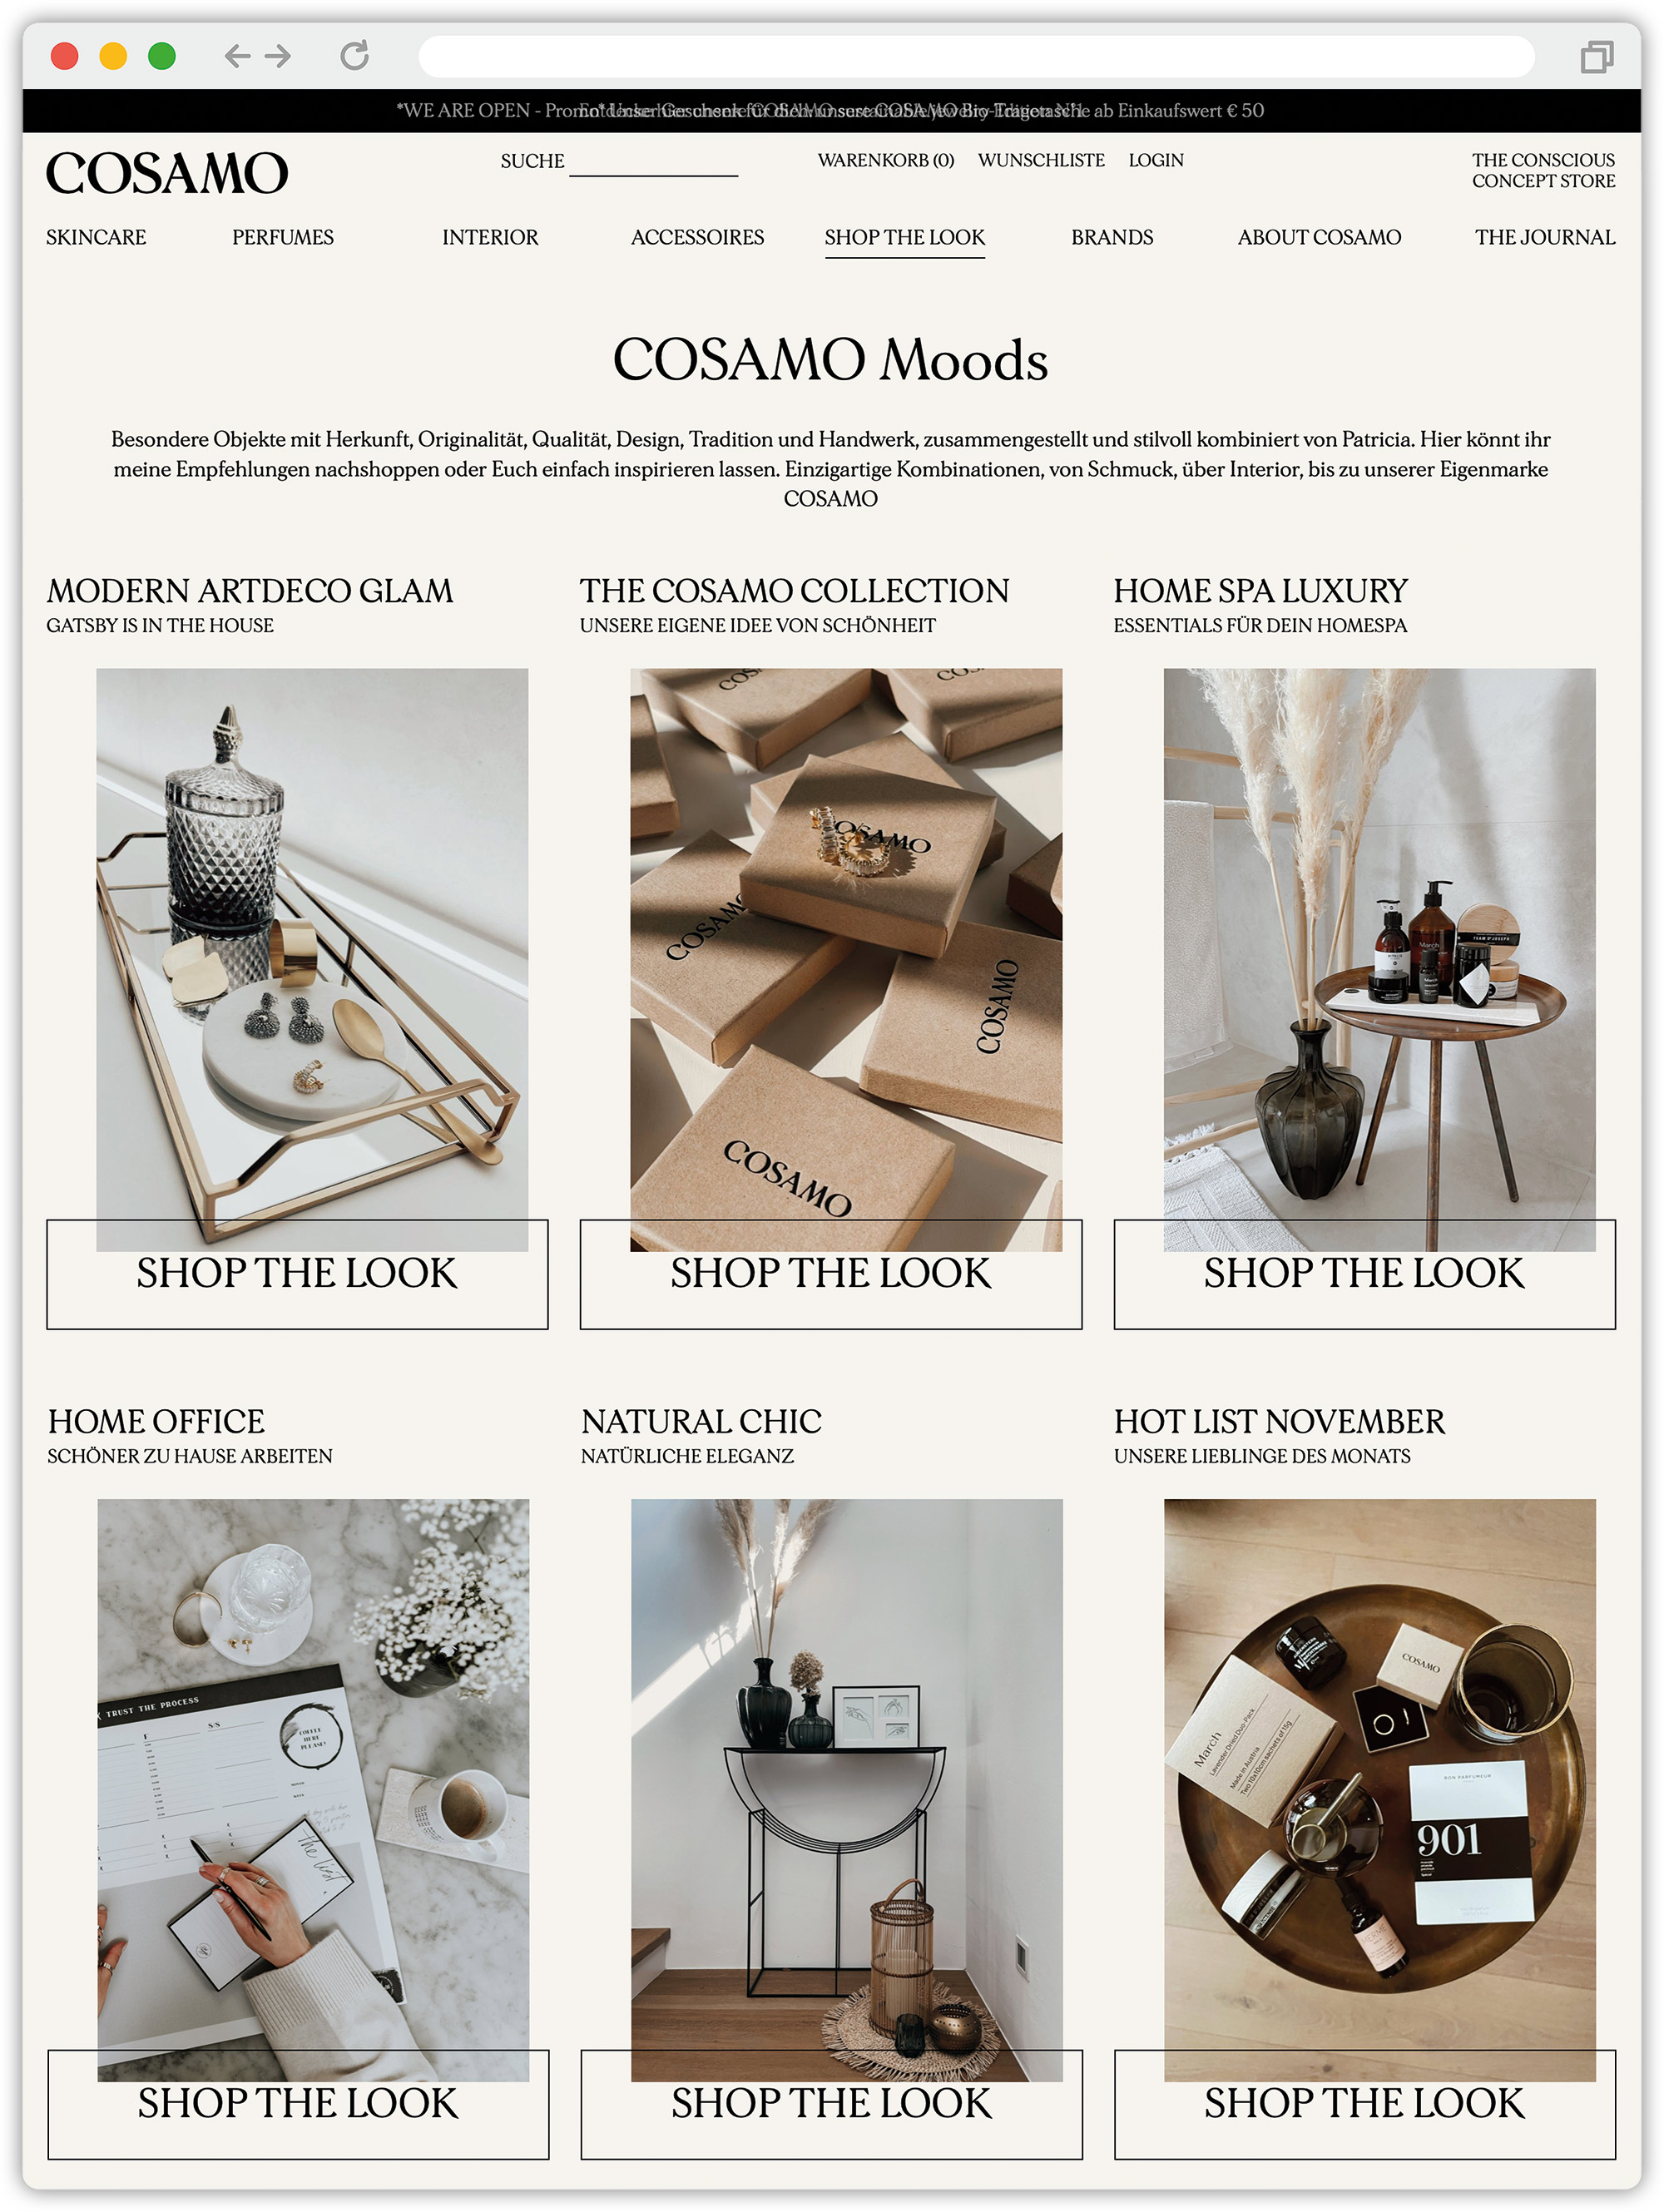 Screenshot vom Shop the Look von Cosamo